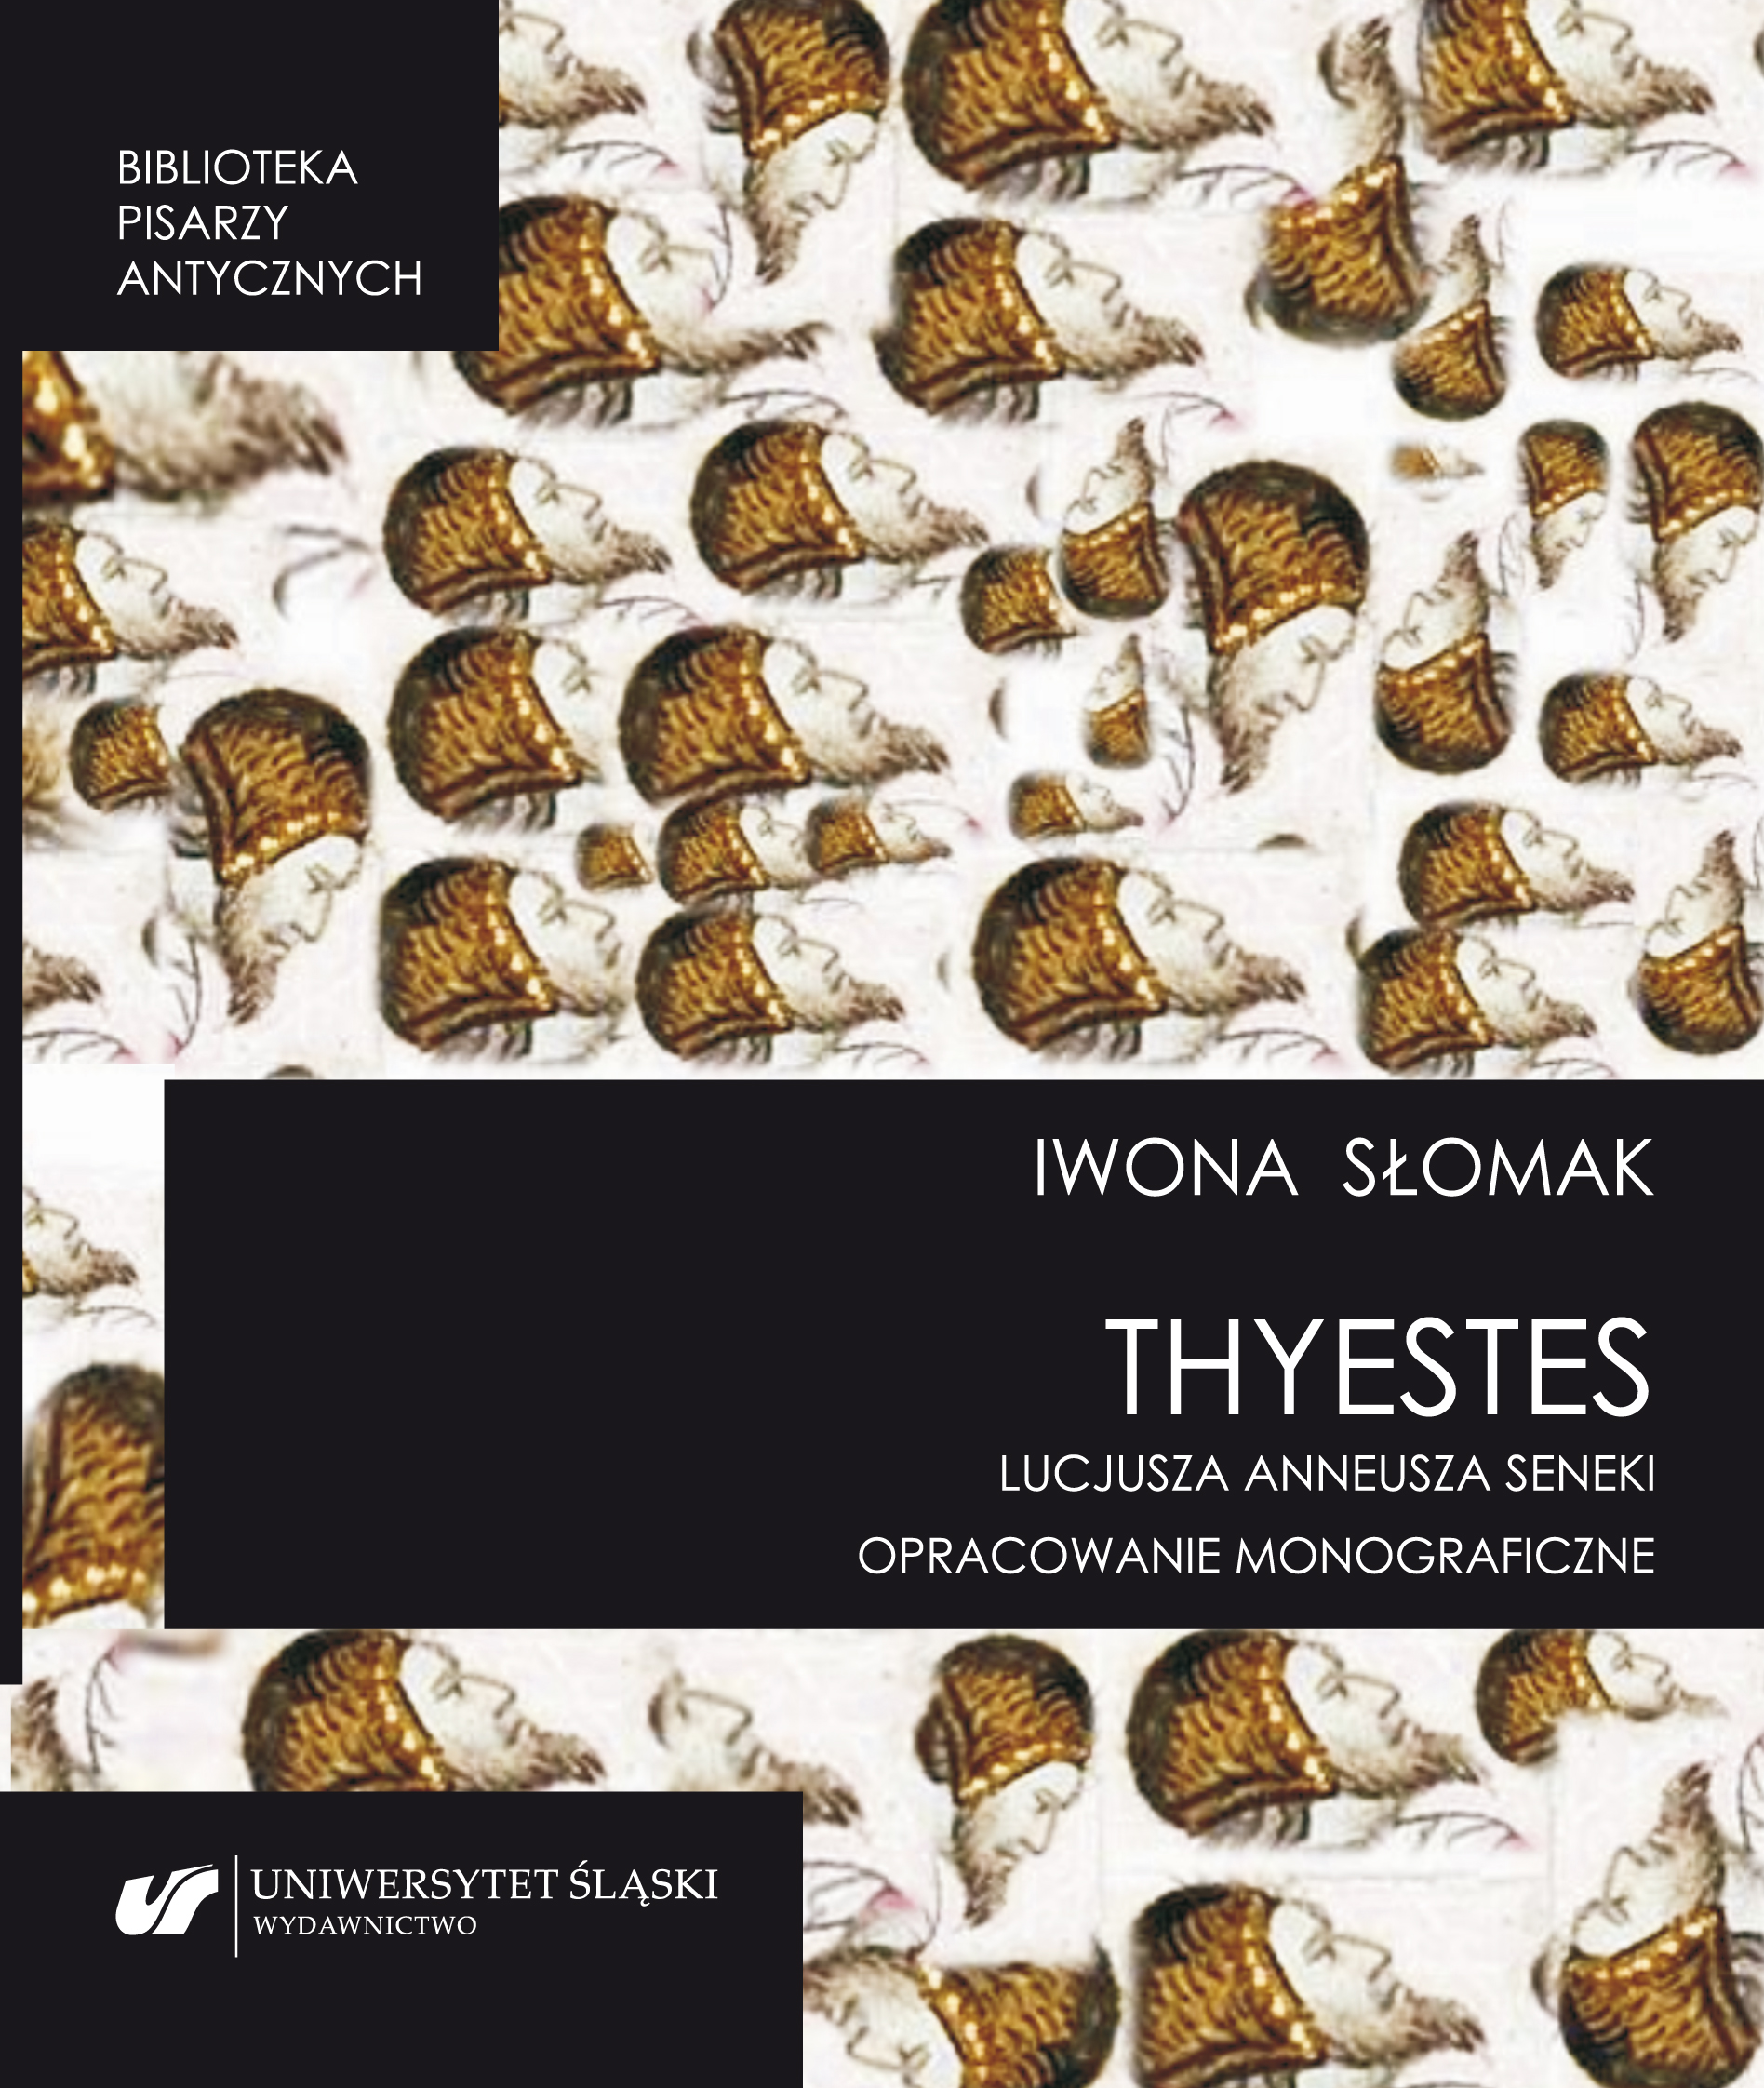 "Thyestes" by Lucius Annaeus Seneca. Monograph study Cover Image